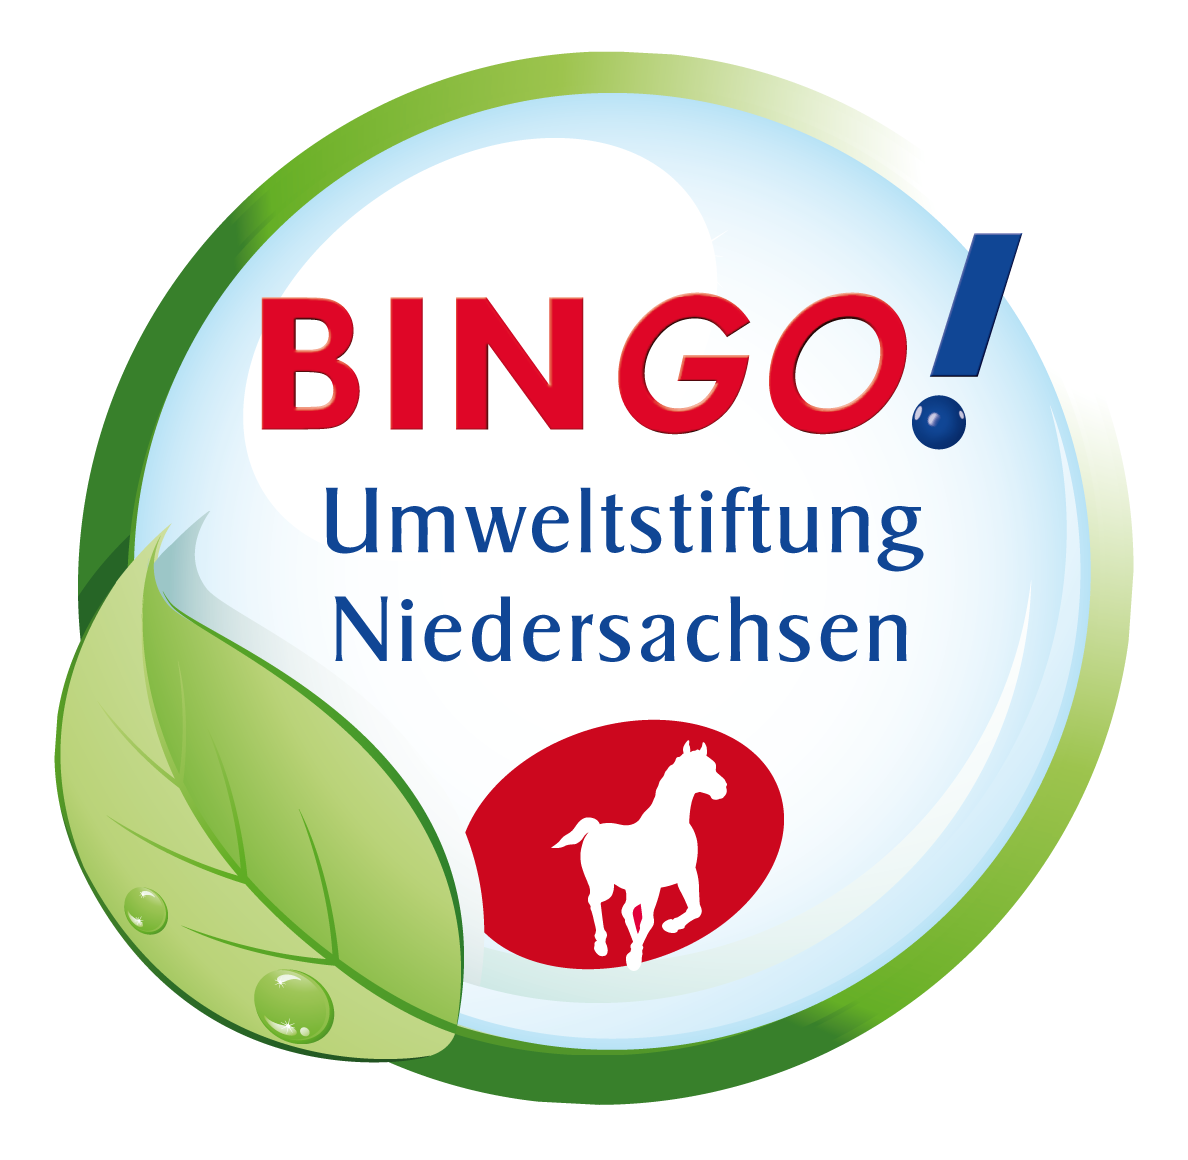 Fondation Bingo